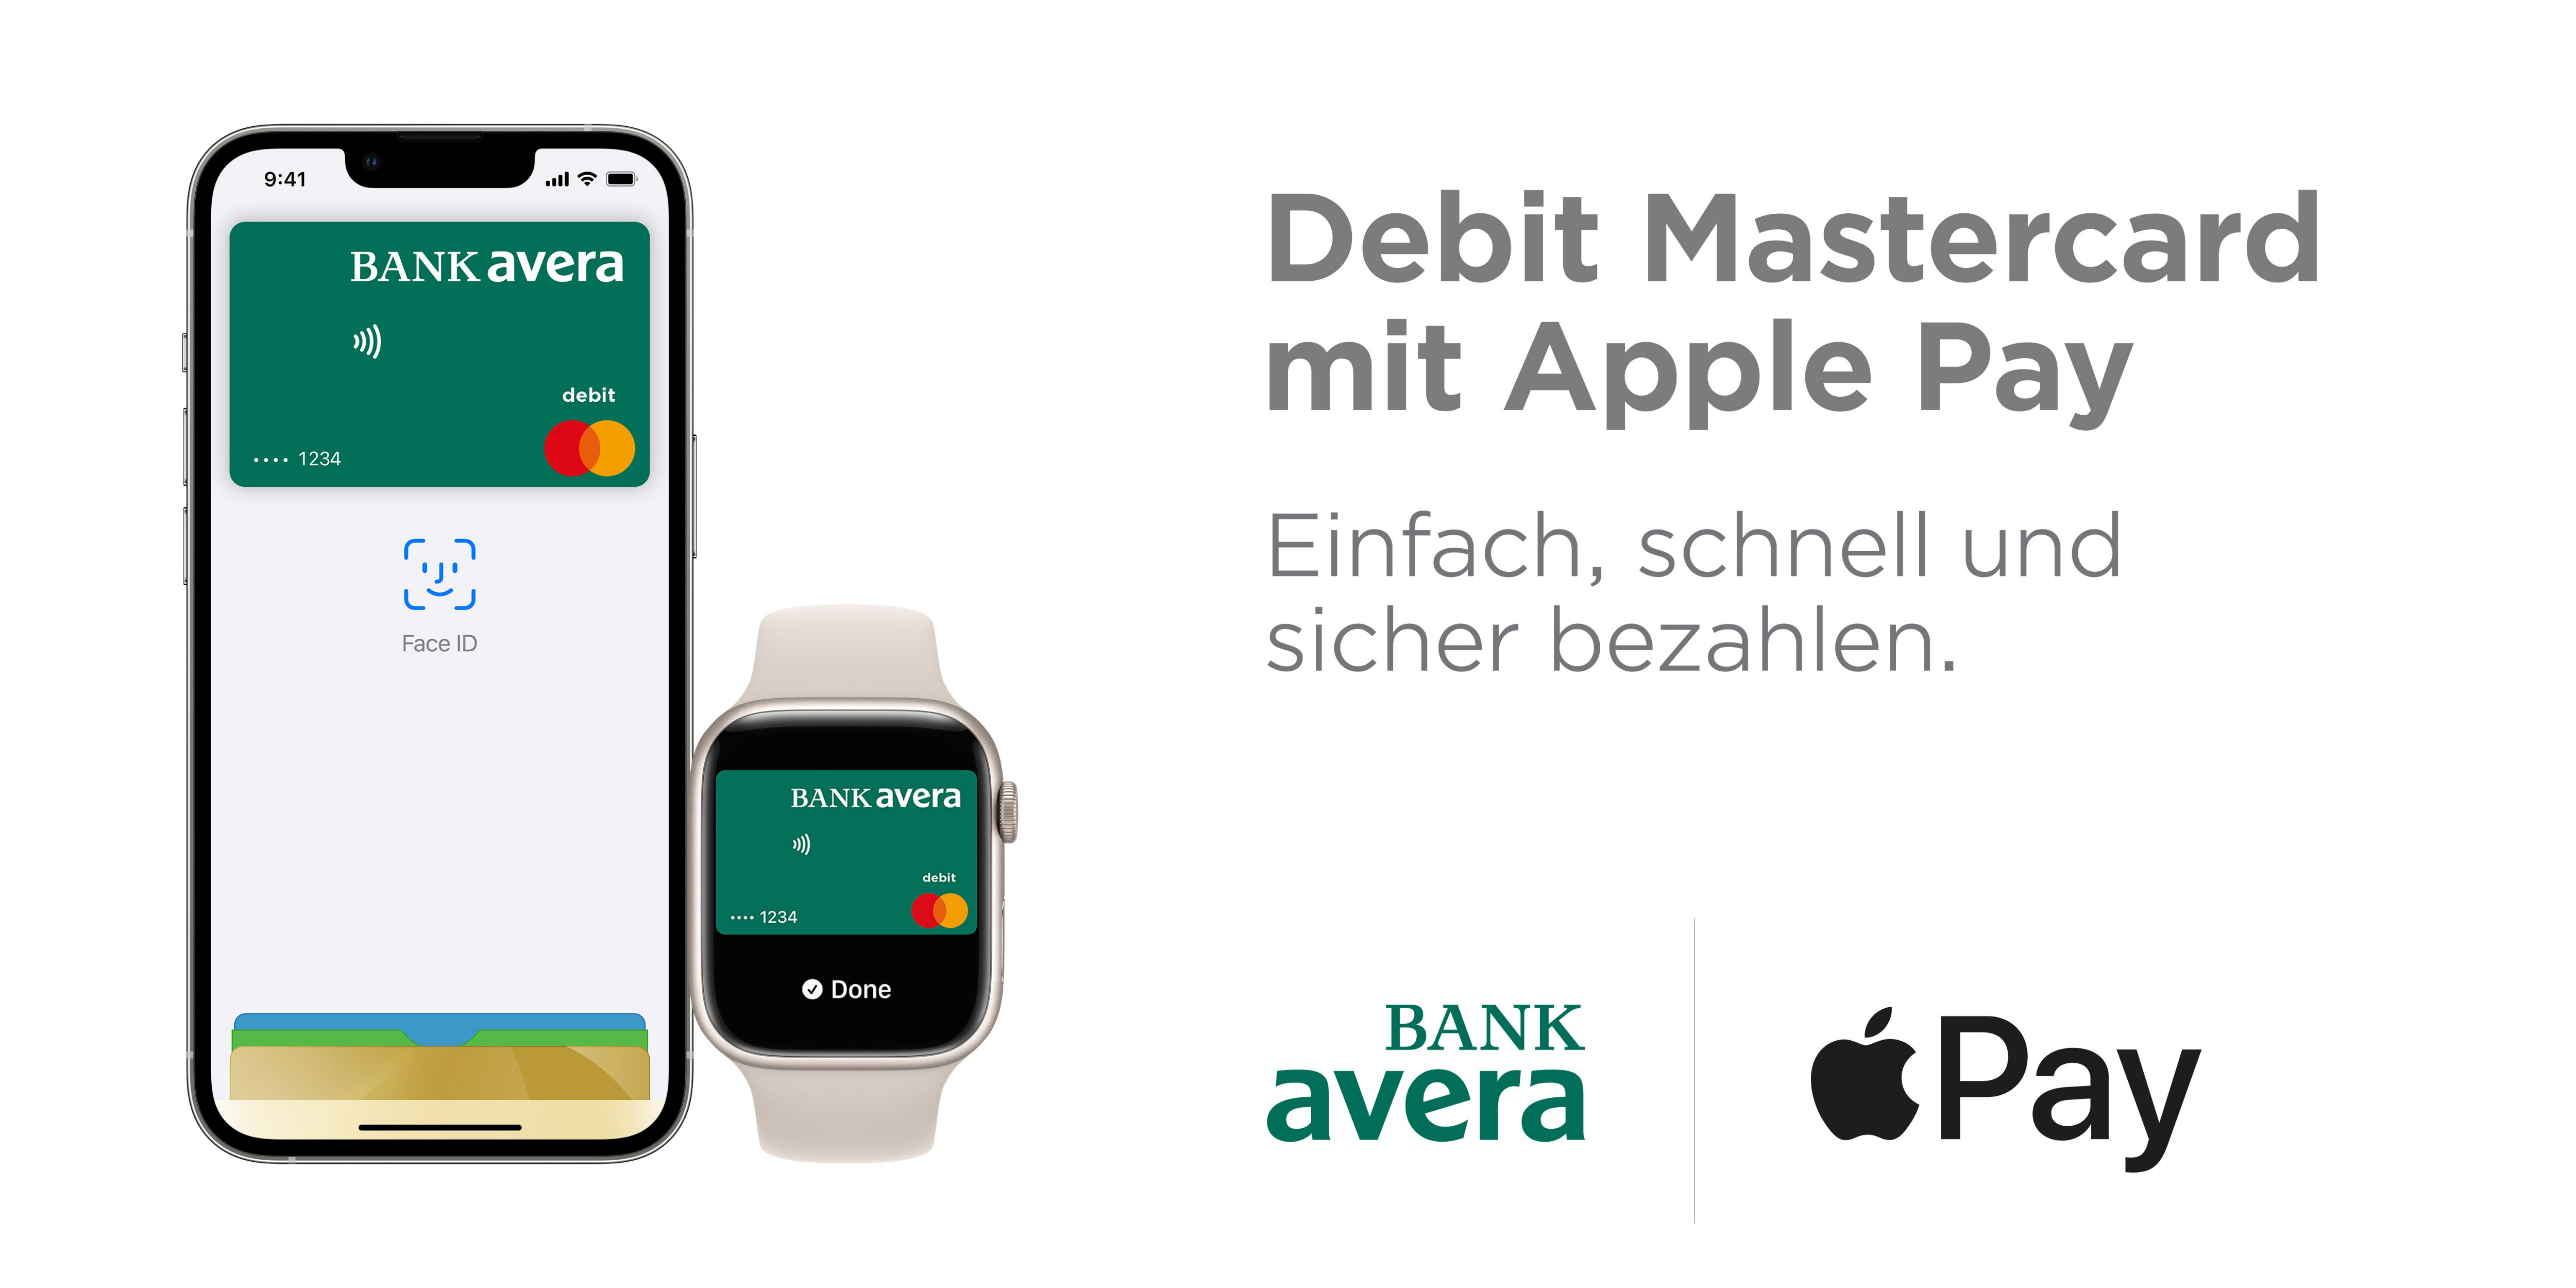 Debit Mastercard mit Apple Pay.jpg